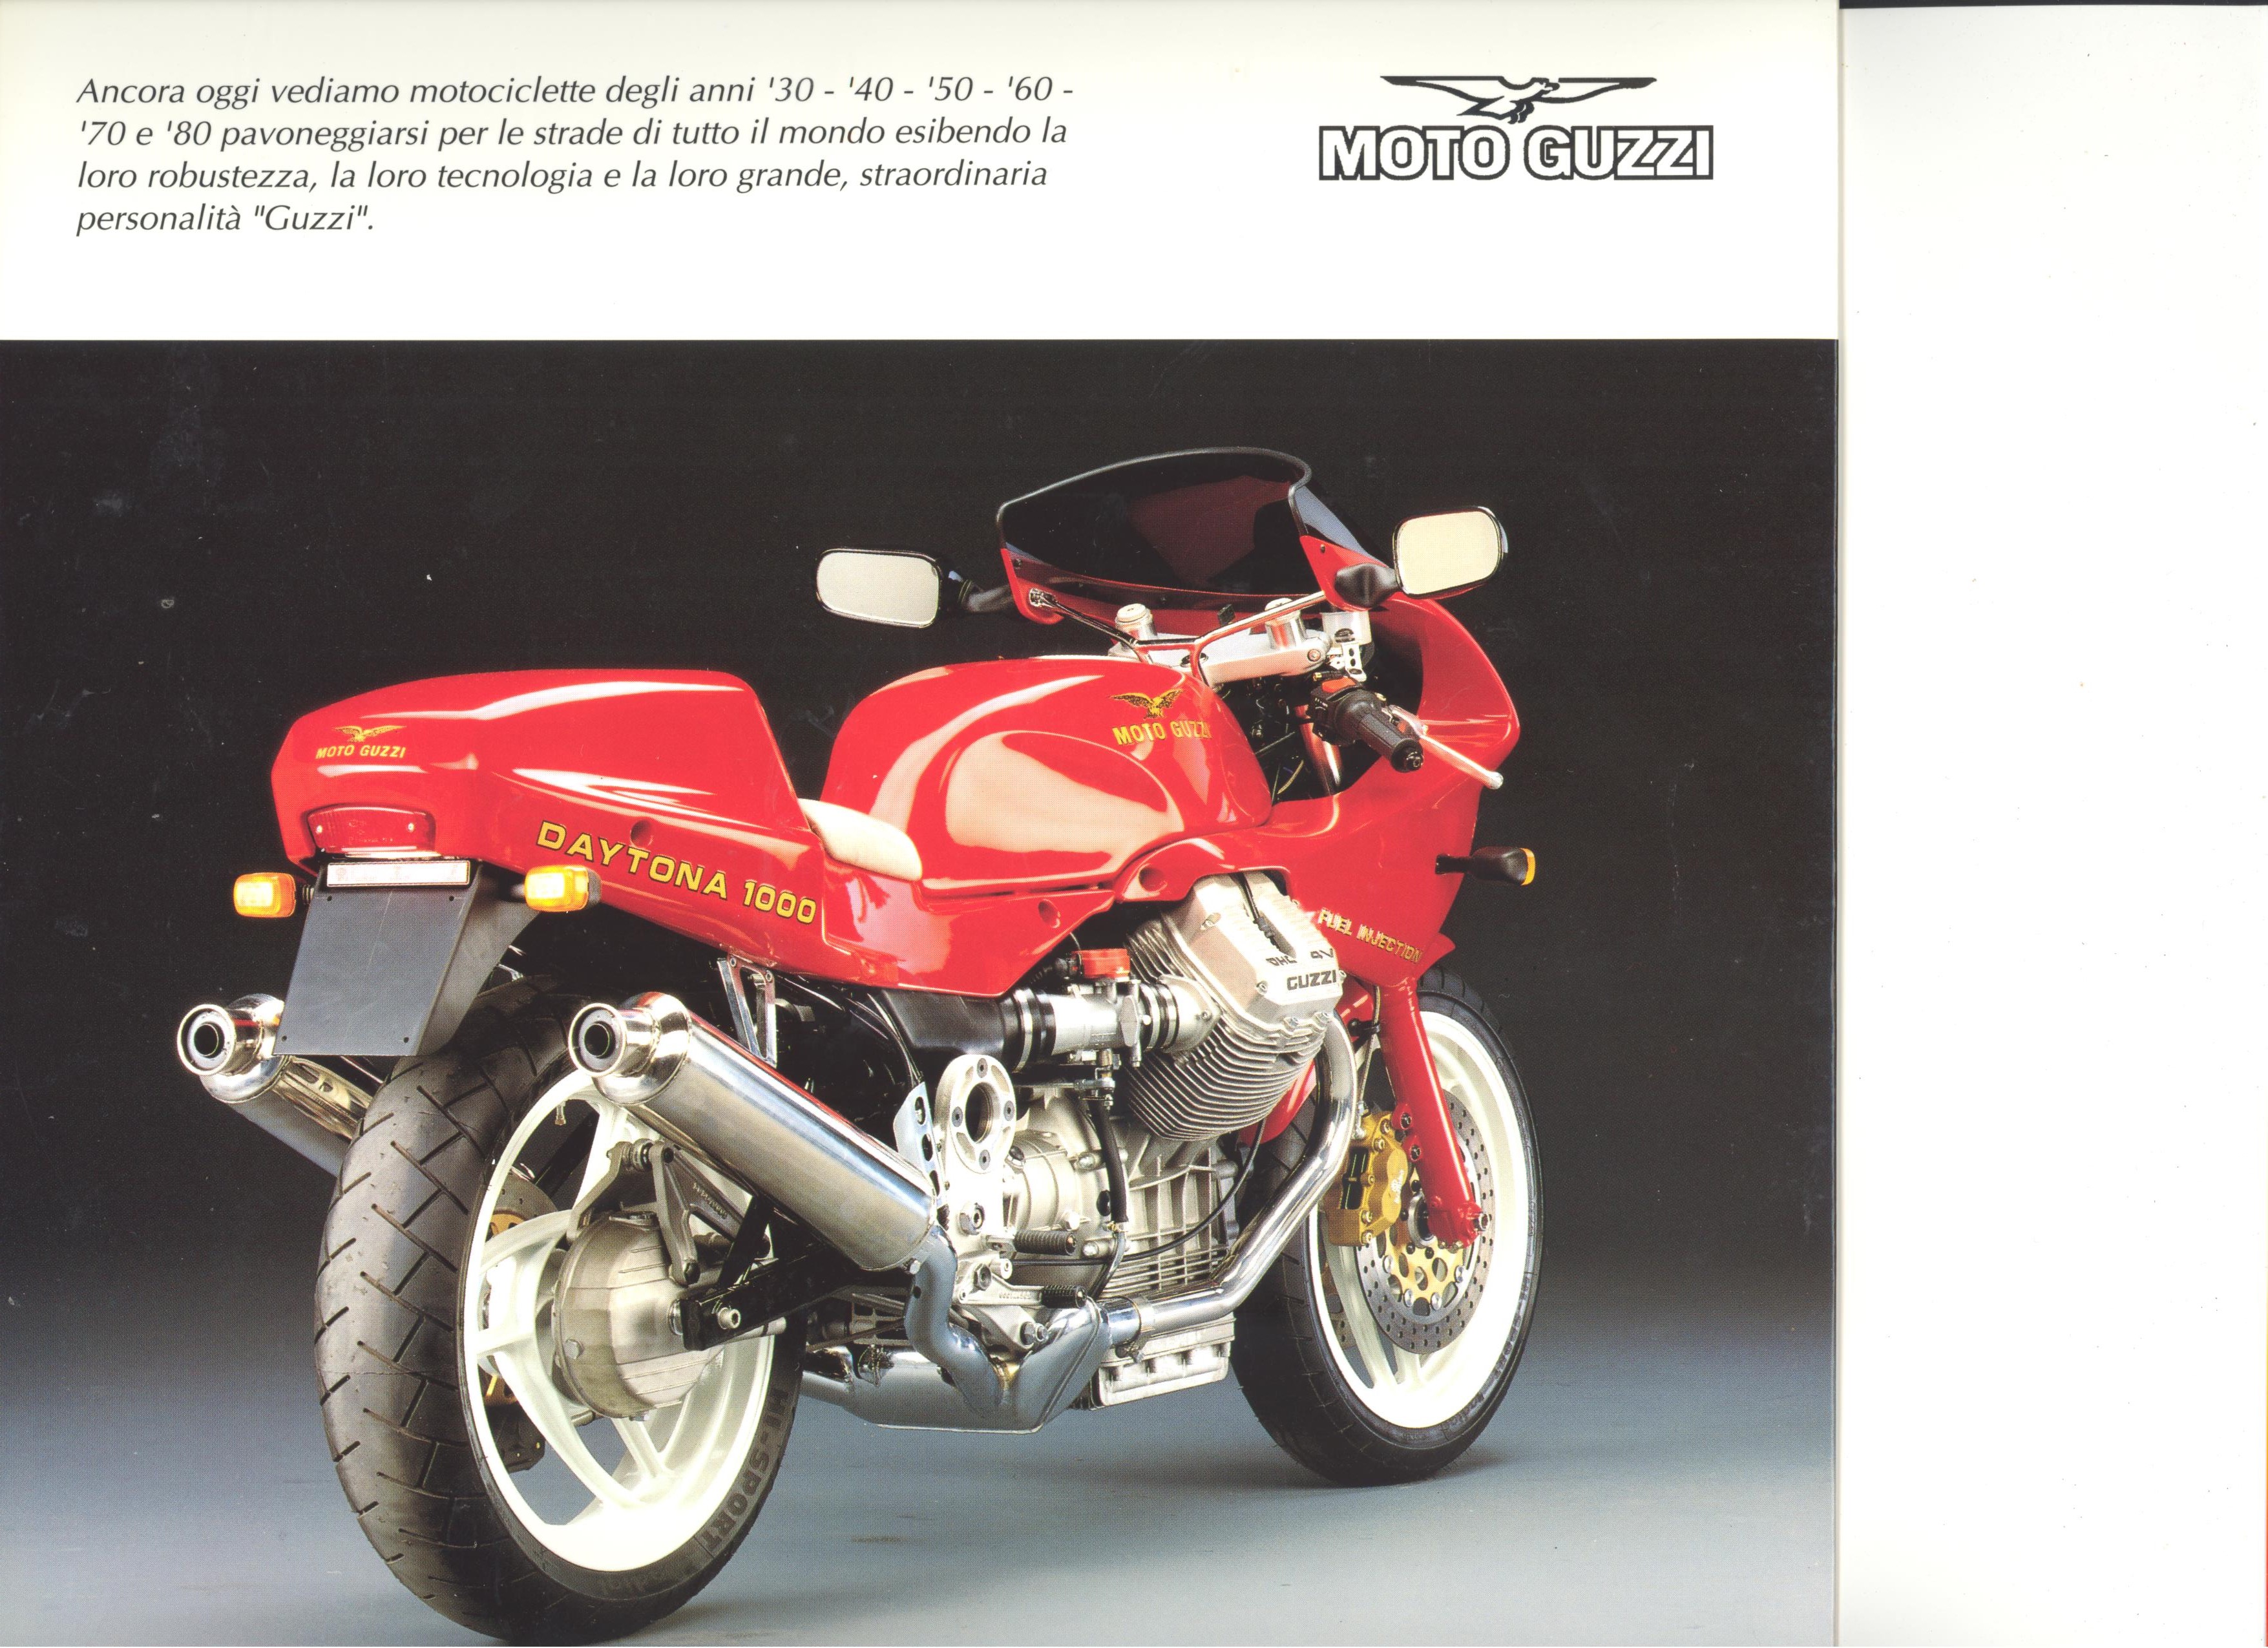 Moto Guzzi factory brochure: Daytona 1000